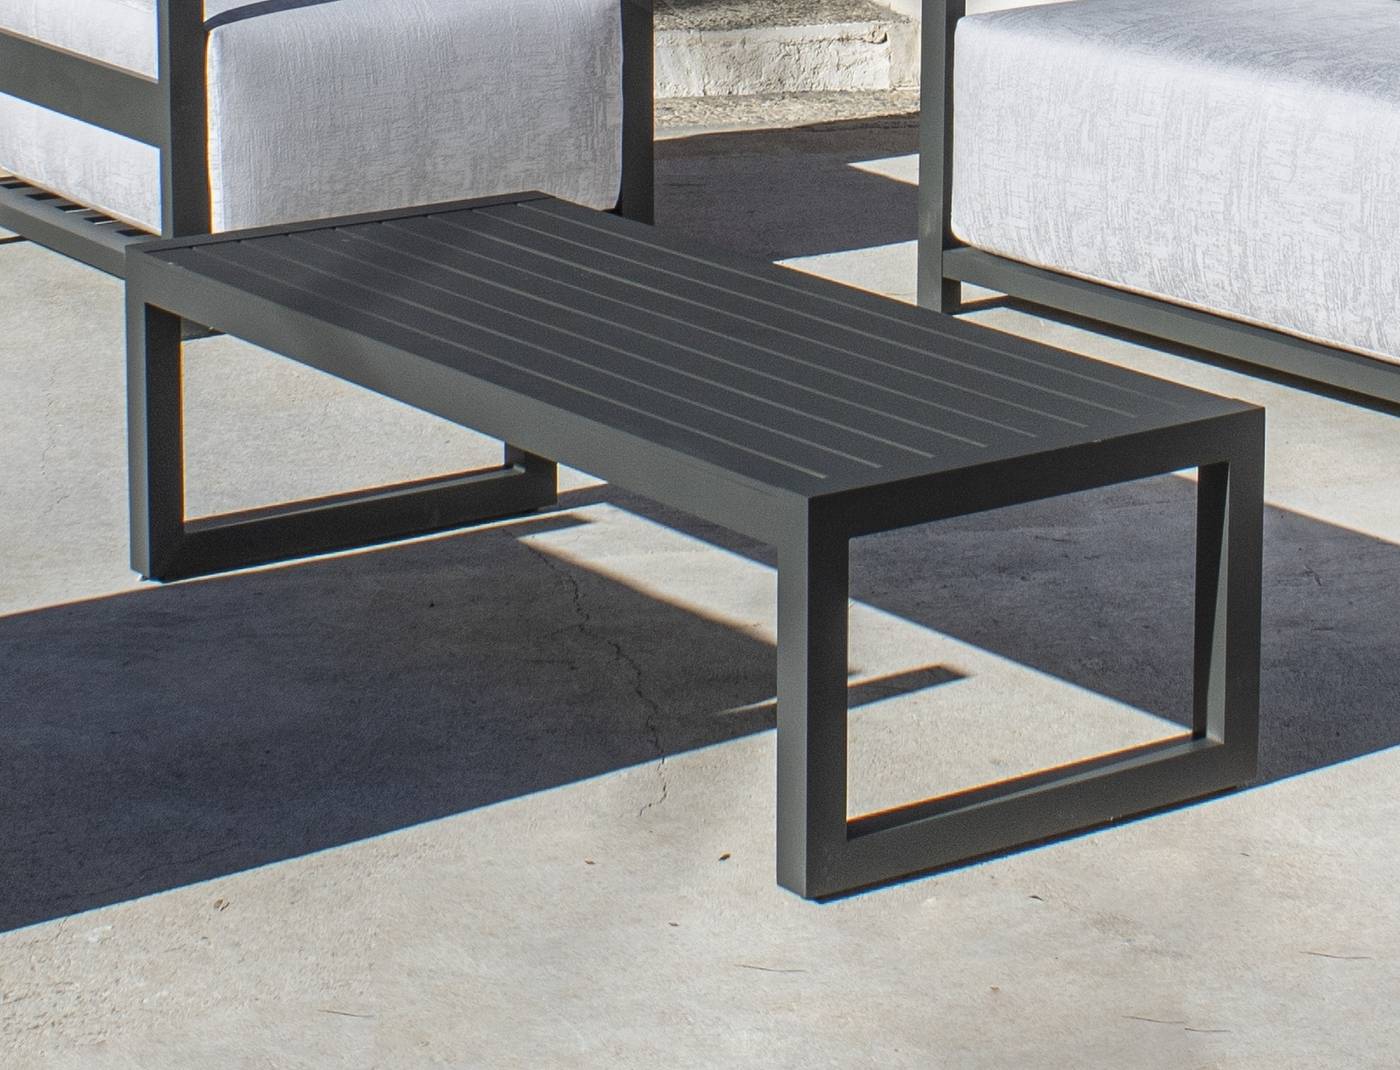 Set Aluminio Palermo-8 - Conjunto de aluminio: sofá de 3 plazas + 2 sillones + 1 mesa de centro. Disponible en color blanco, antracita, marrón, champagne o plata.